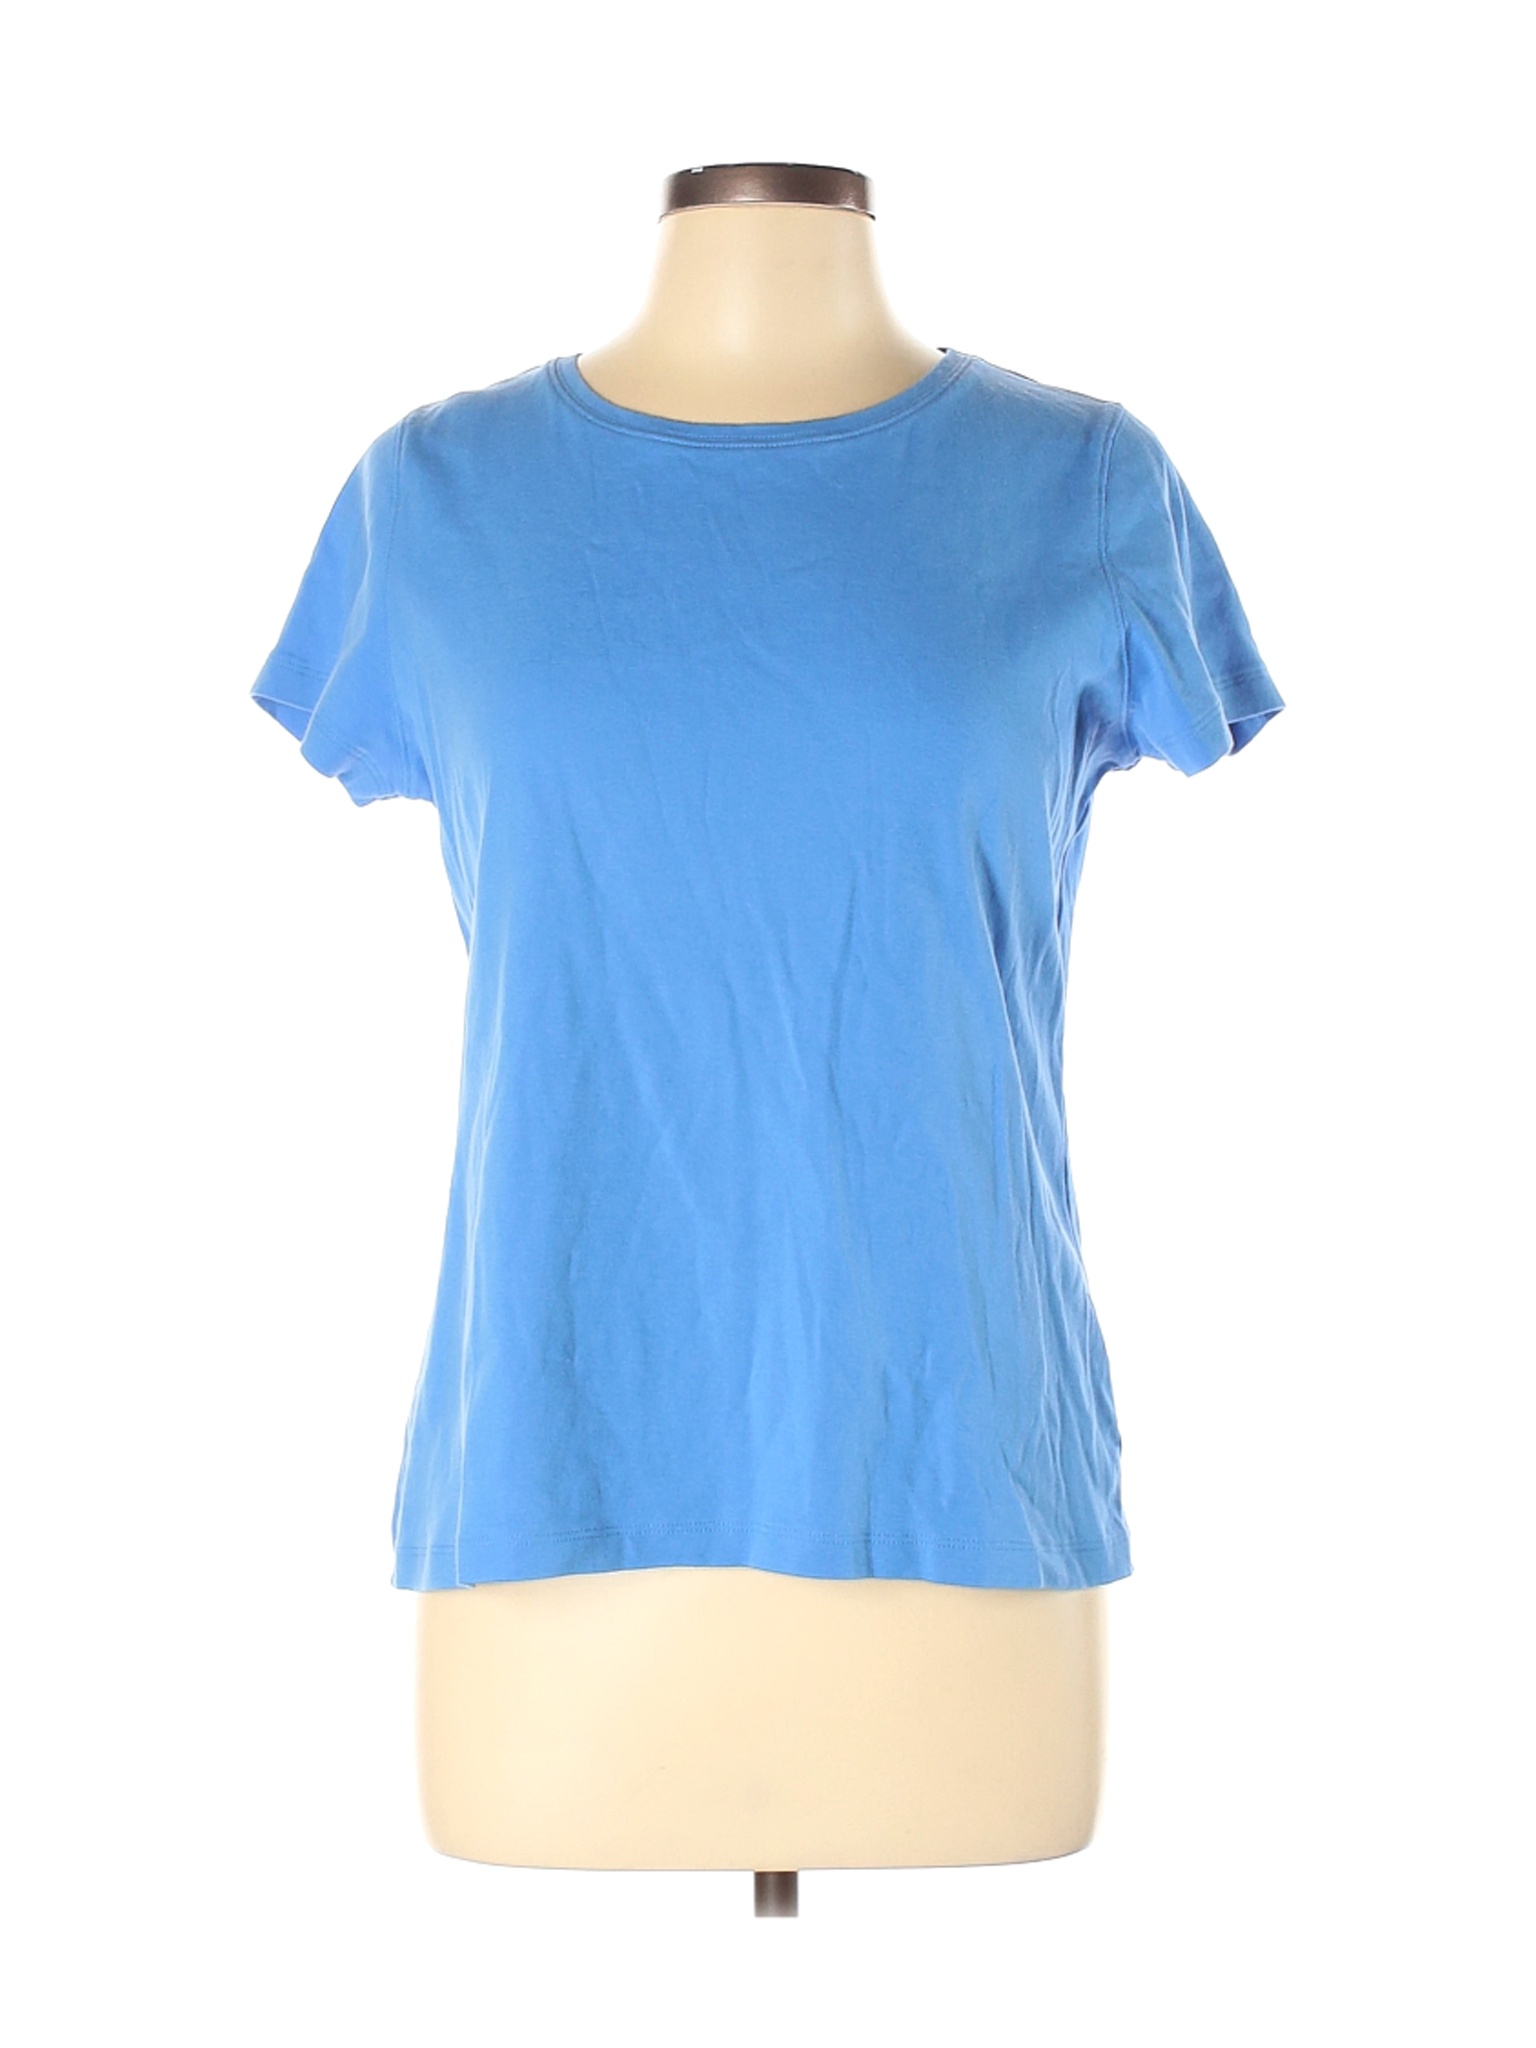 St. John's Bay Women Blue Short Sleeve T-Shirt L Petites | eBay